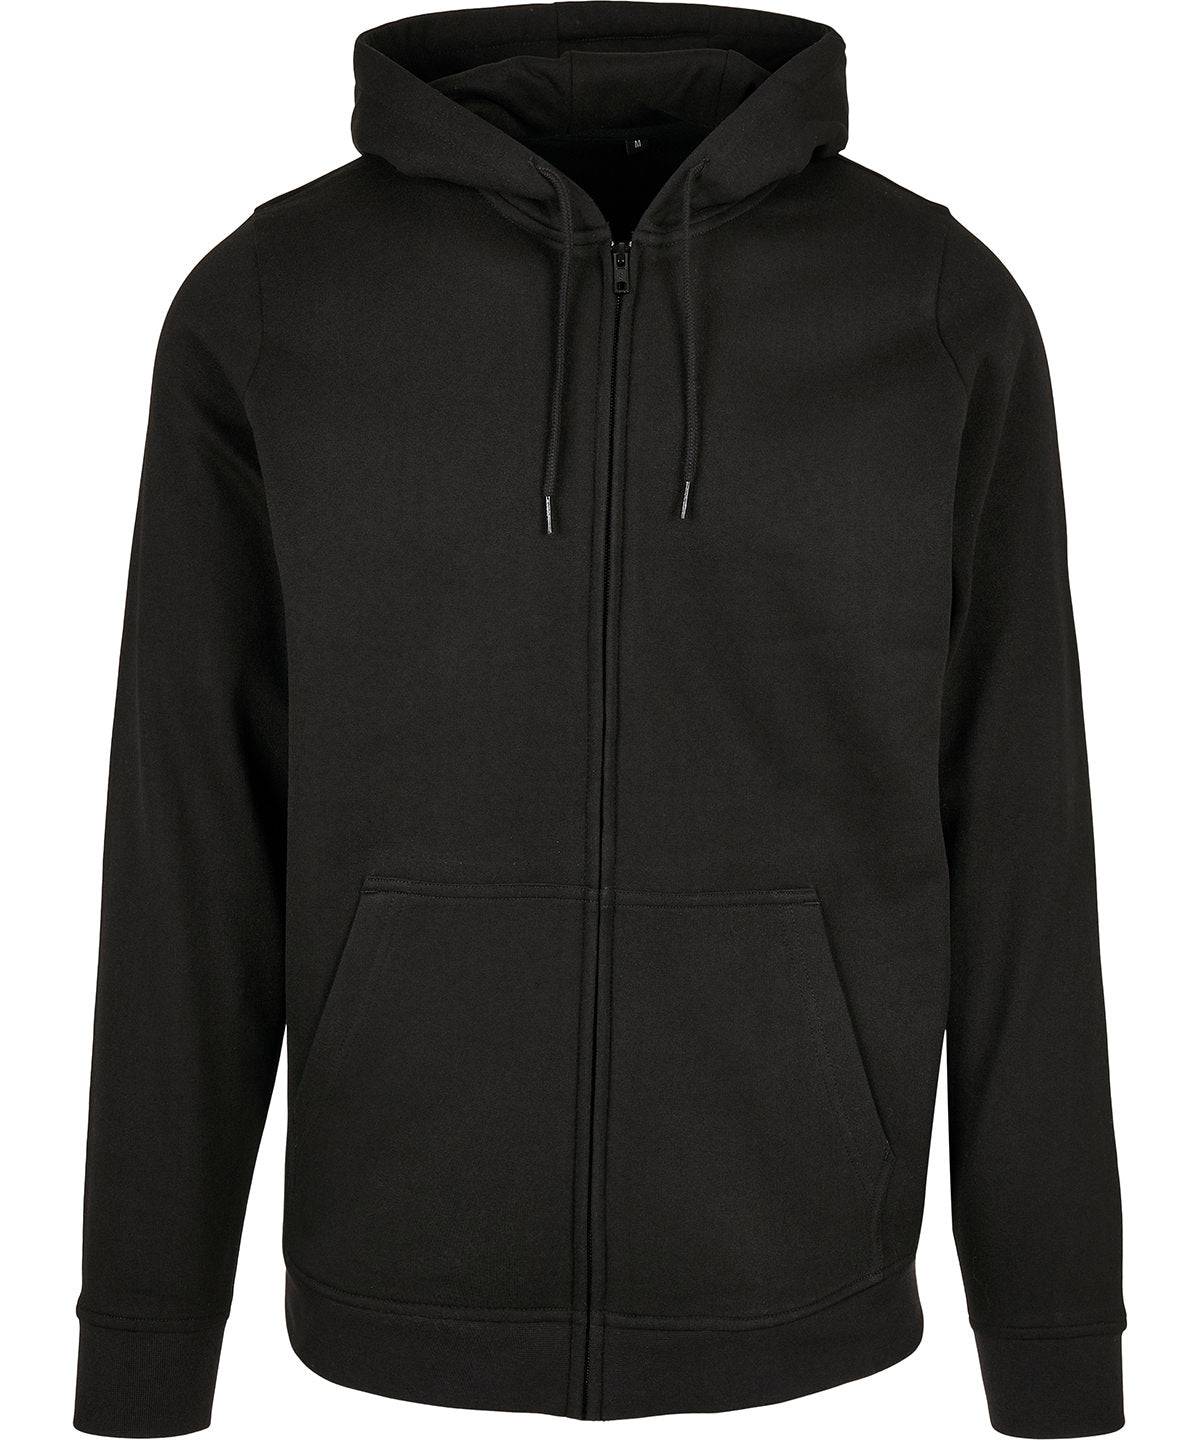 Load image into Gallery viewer, Navy - Basic zip hoodie
